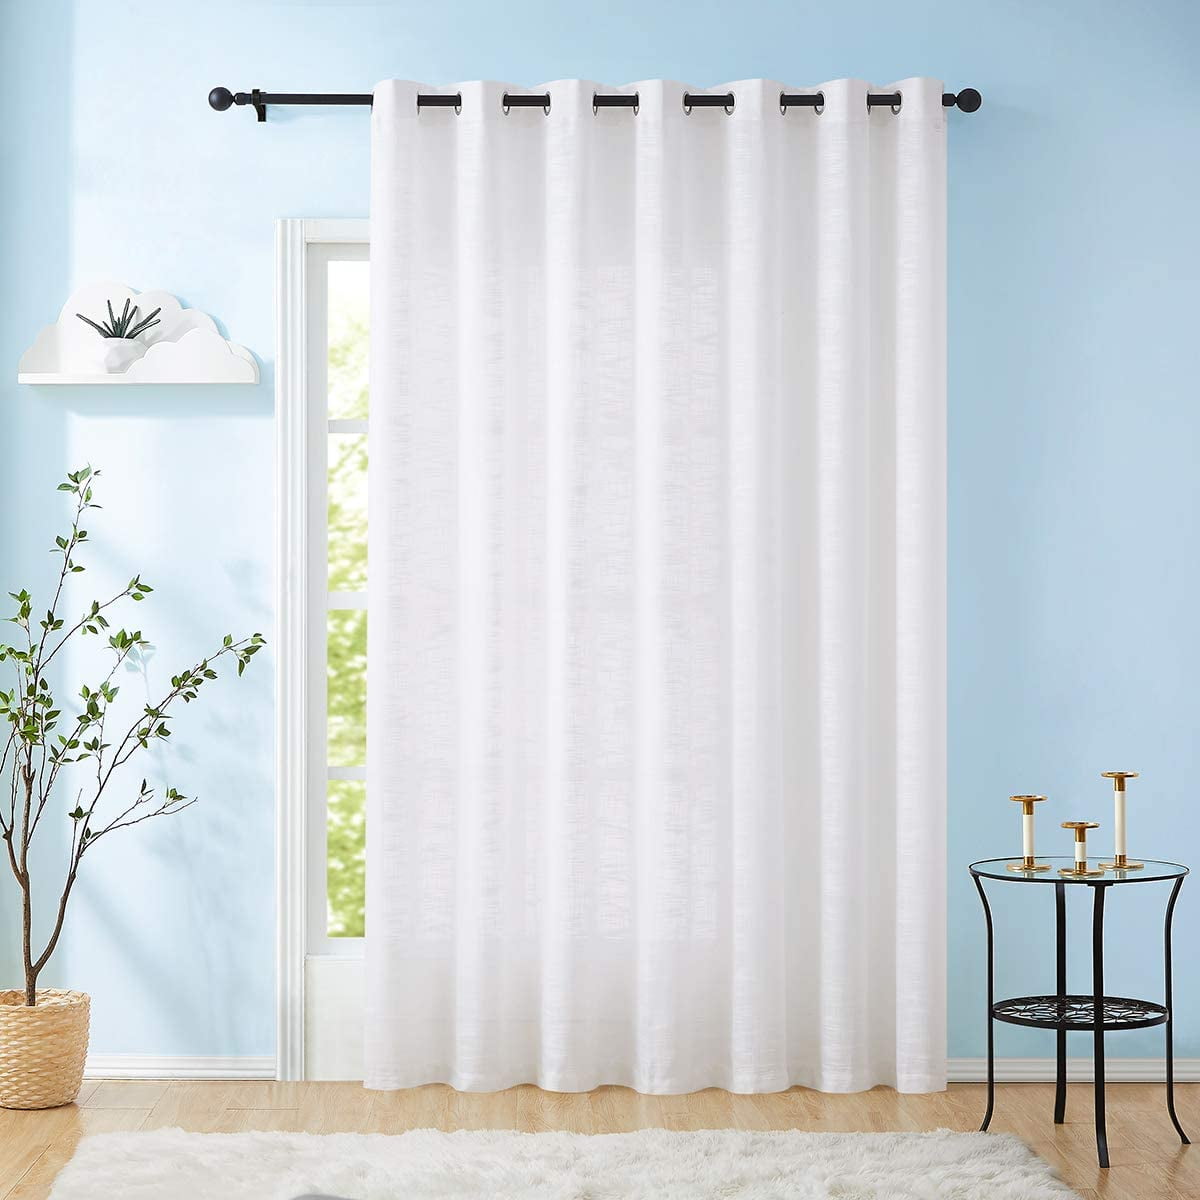 Blue Sky Window Curtain Tree Curtains Drapes Living Room 50% Blackout Home Decor 